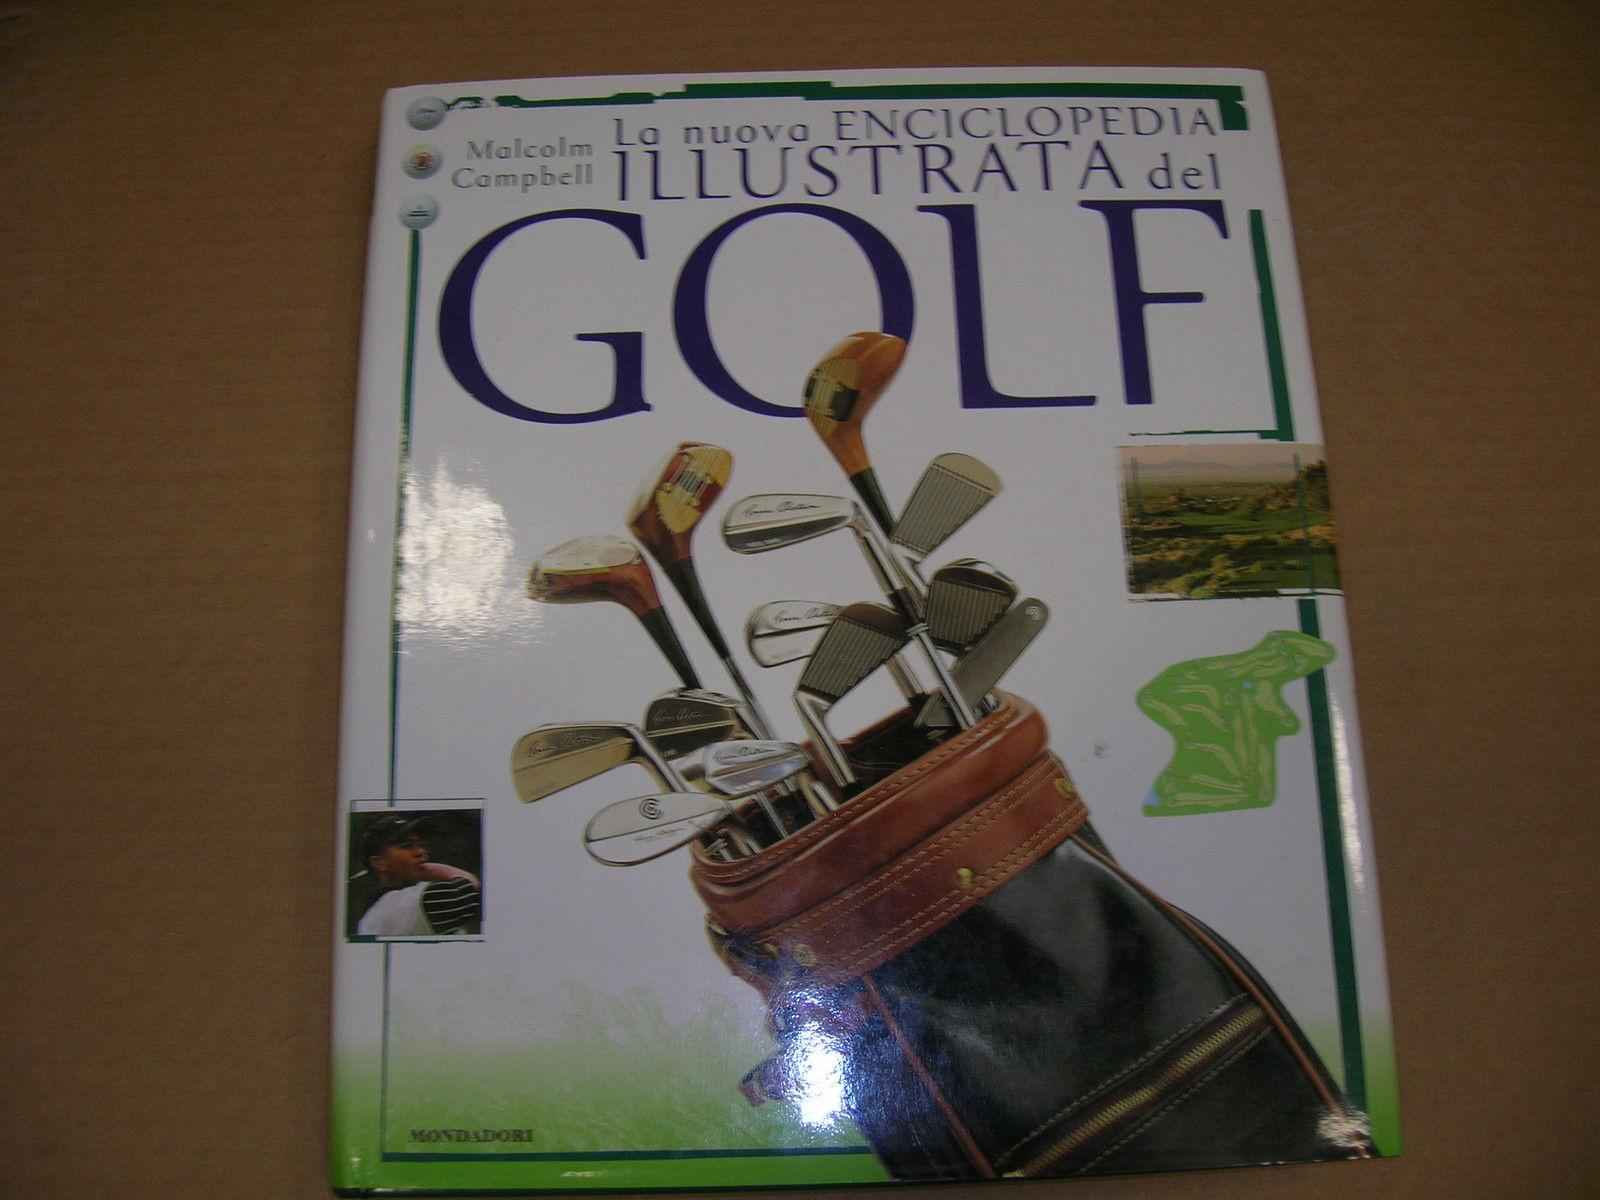 La nuova enciclopedia illustrata del golf - Campbell, Malcom